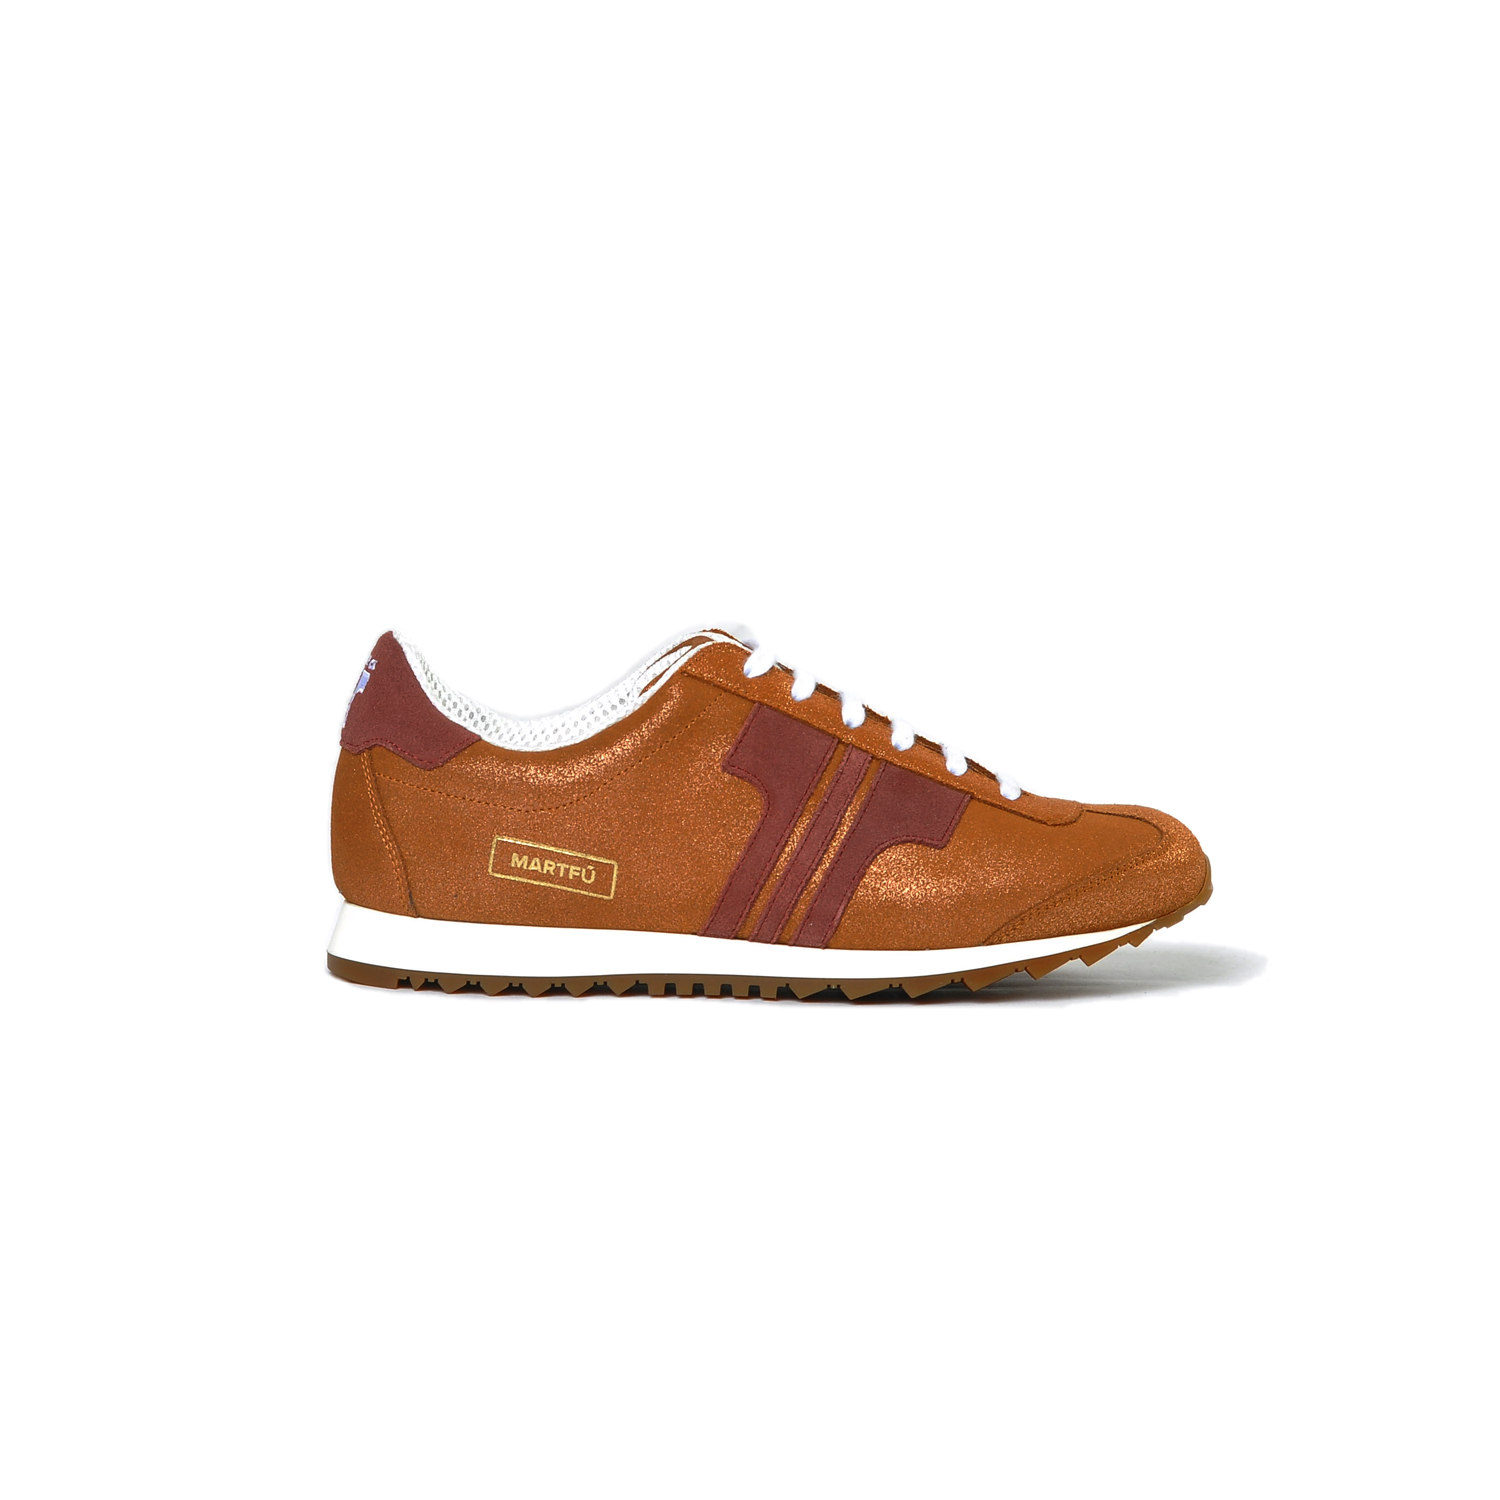 Tisza shoes - Martfű - Rosegold-maroon